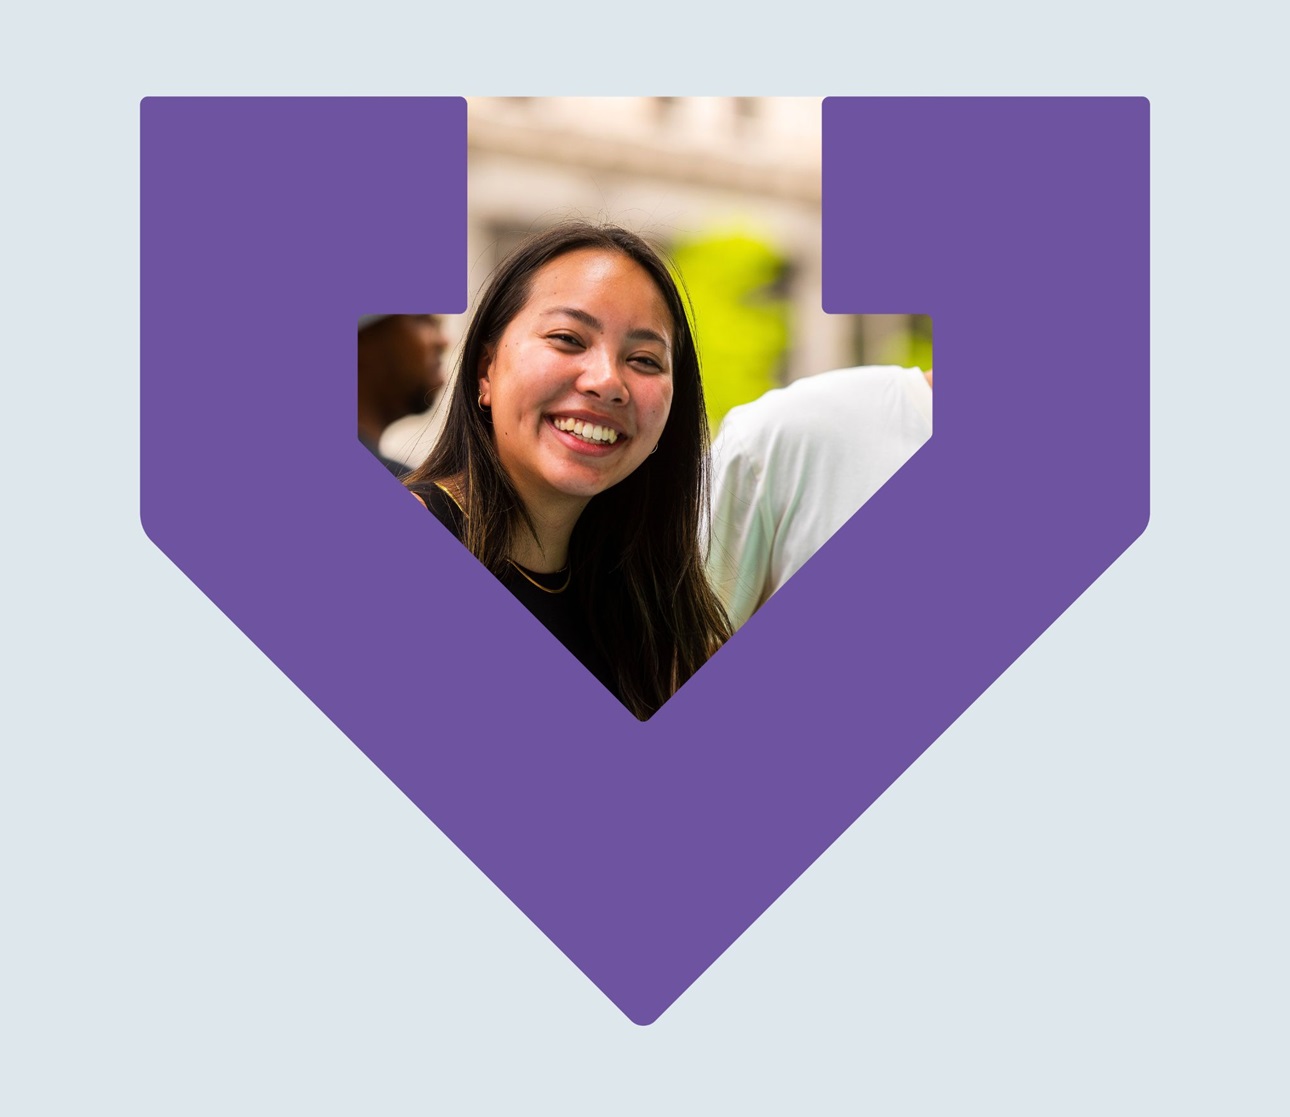 A woman smiling is framed by the purple TBF logo arrow